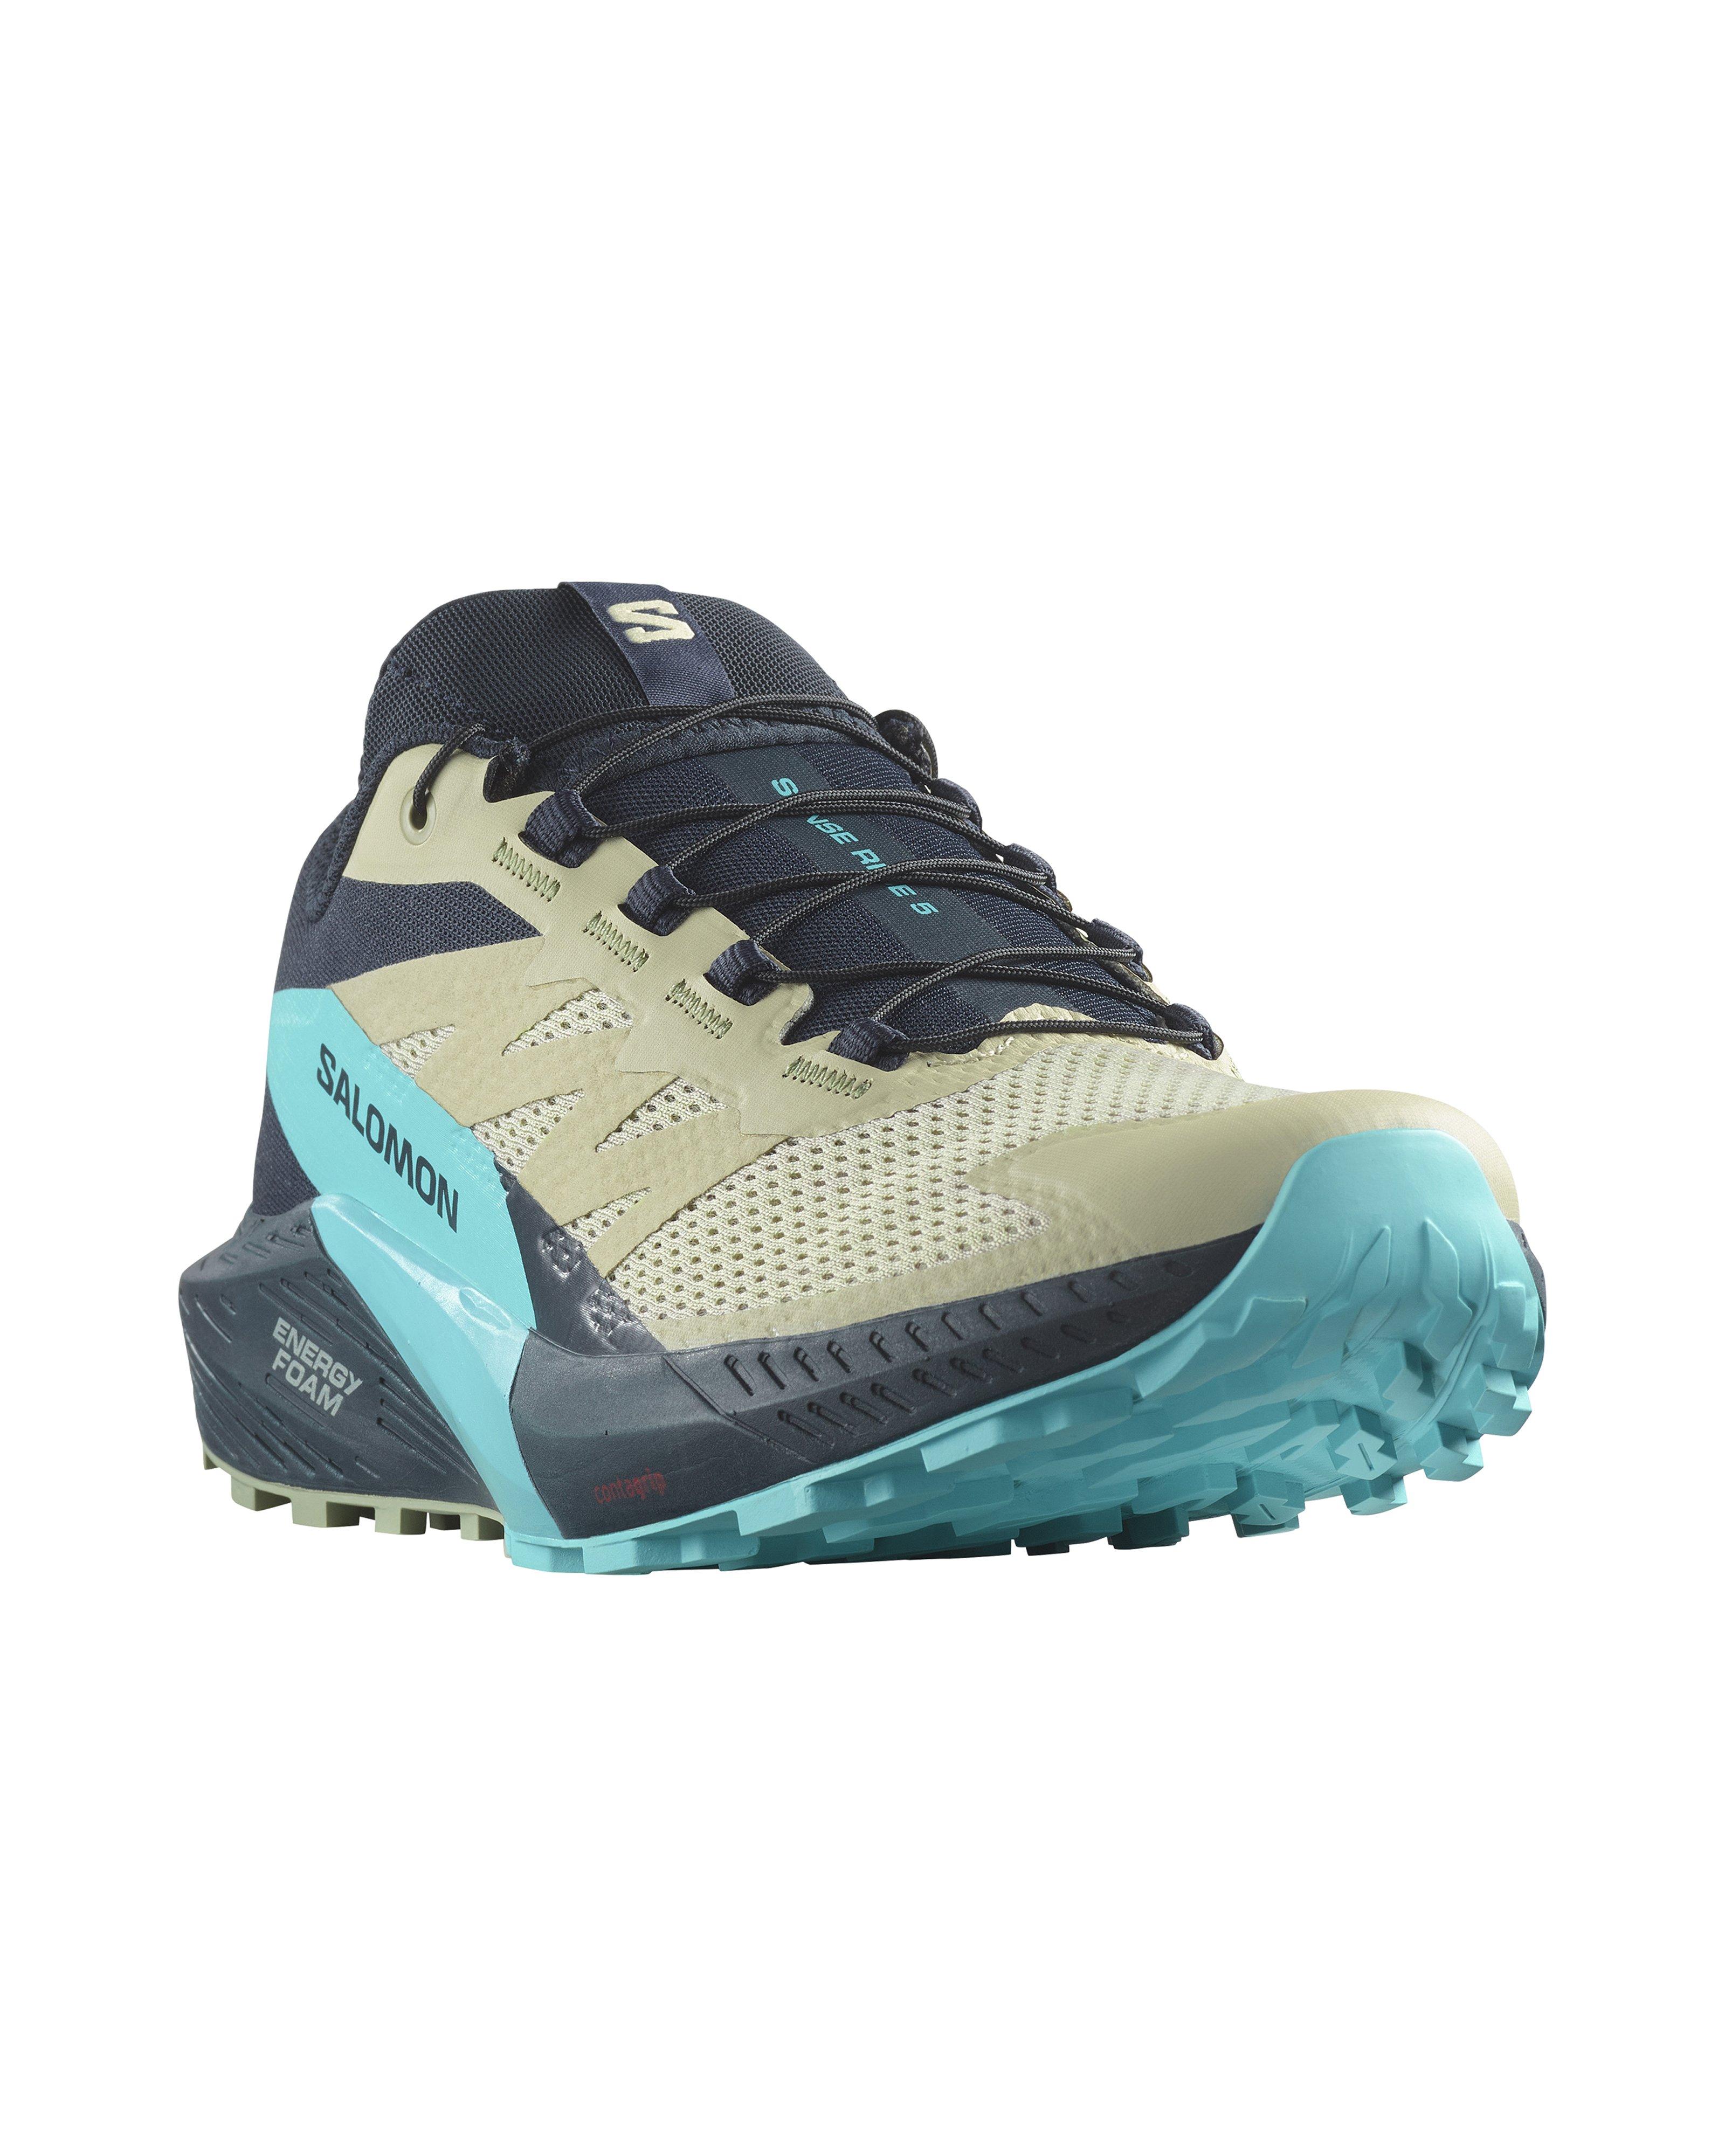 Salomon Men's Sense Ride 5 Trail Running Shoes -  Grey